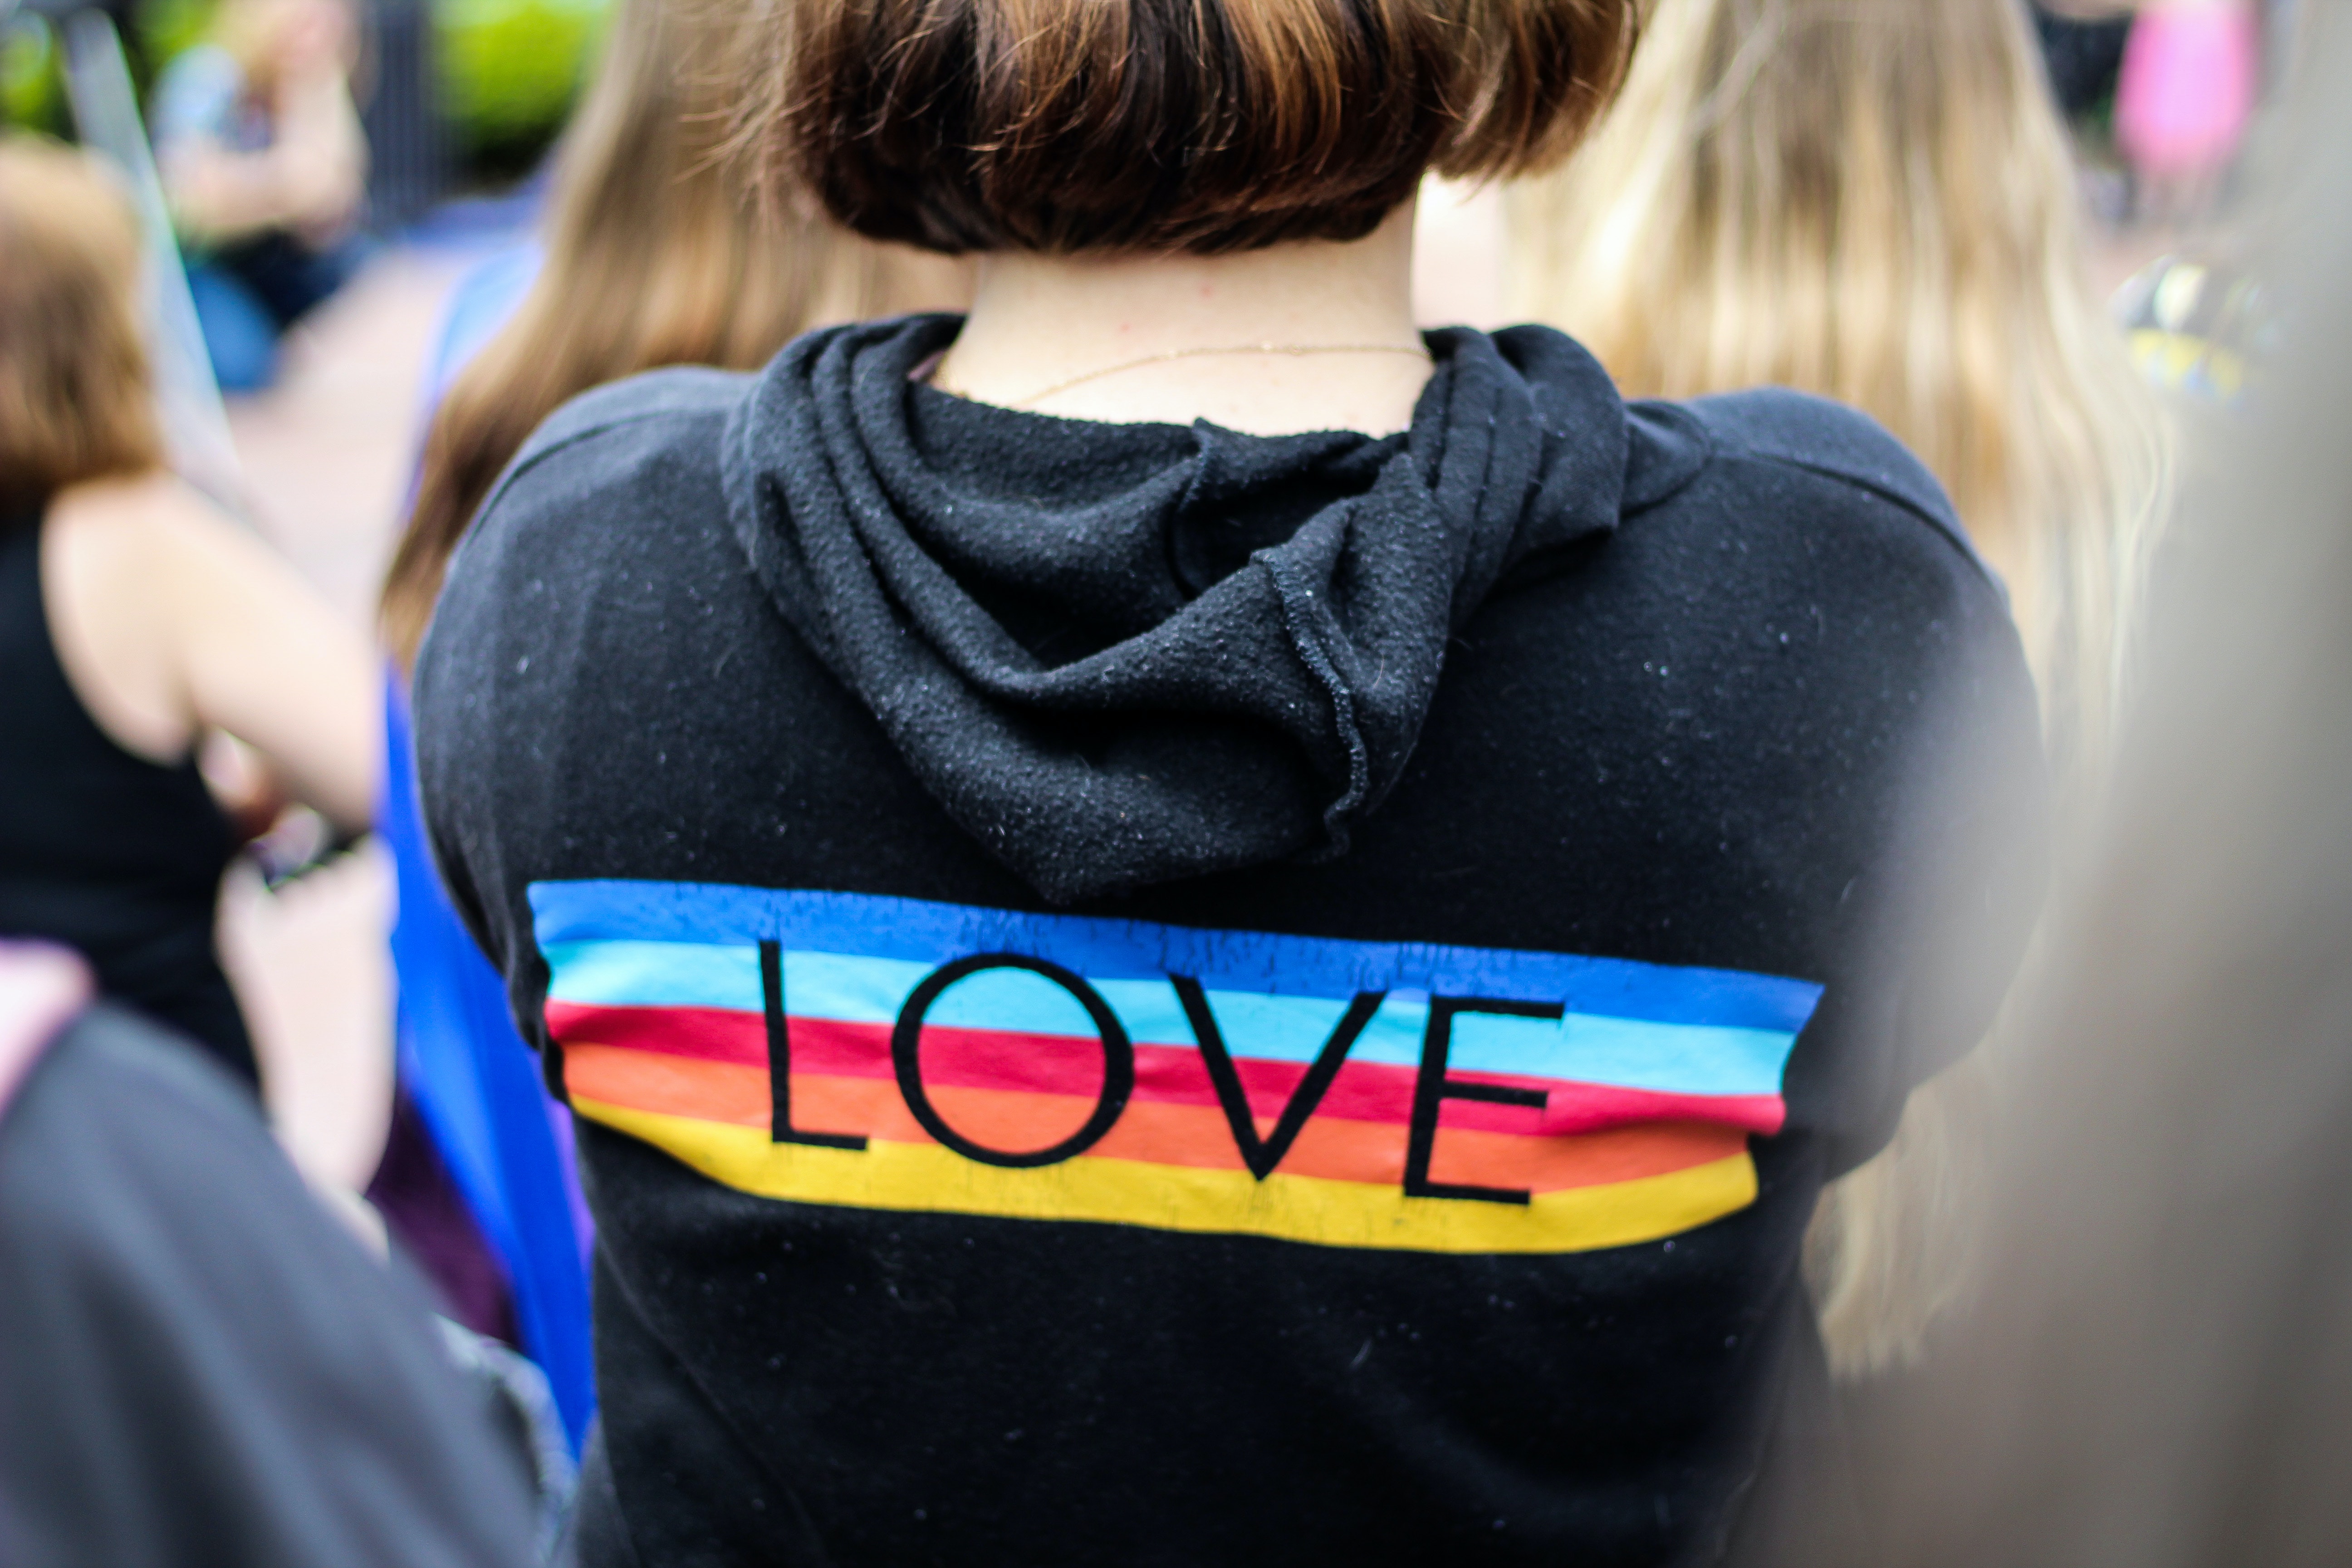 Pride στα Χανιά: Καλούν ομοφοβική αντιδιαδήλωση, ο ρόλος των Σπαρτιατών – «Θα μας βρουν μπροστά τους», λένε οικογένειες του Ουράνιου Τόξου